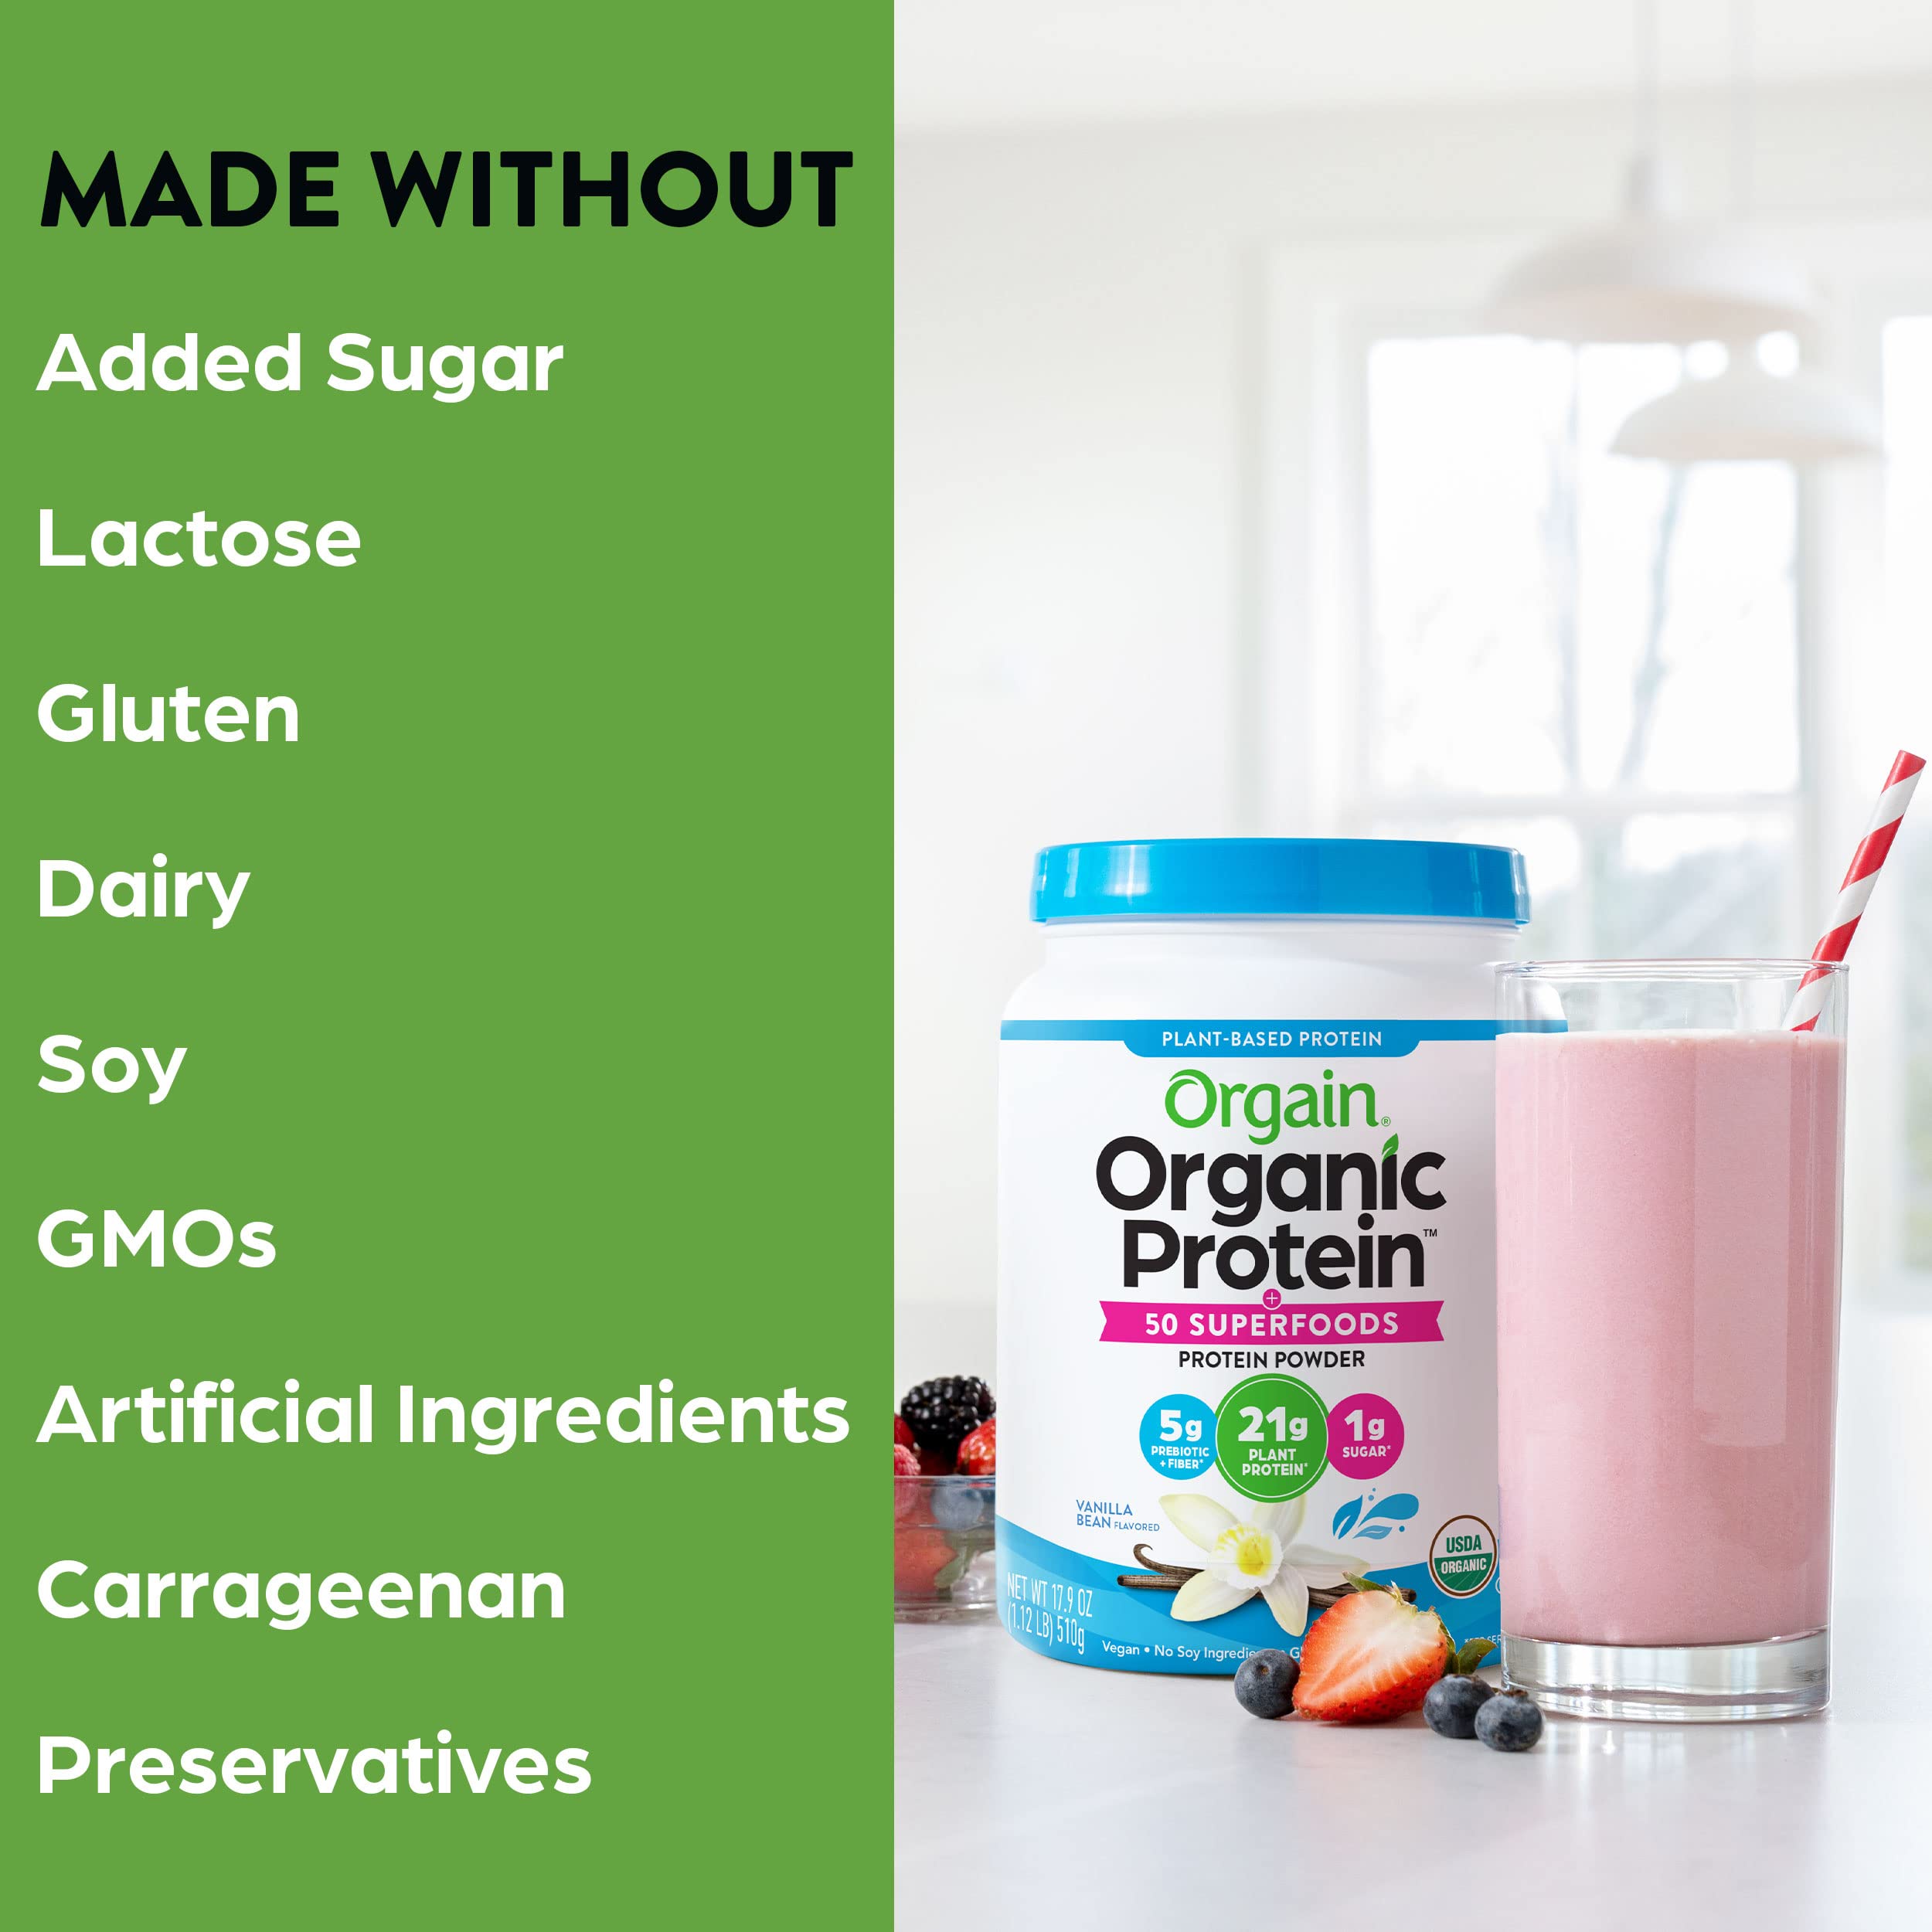 Orgain Organic Protein + Superfoods Powder, Vanilla Bean - 21g of Protein, Vegan, Plant Based, 5g of Fiber, No Dairy, Gluten, Soy or Added Sugar, Non-GMO, 1.12lb